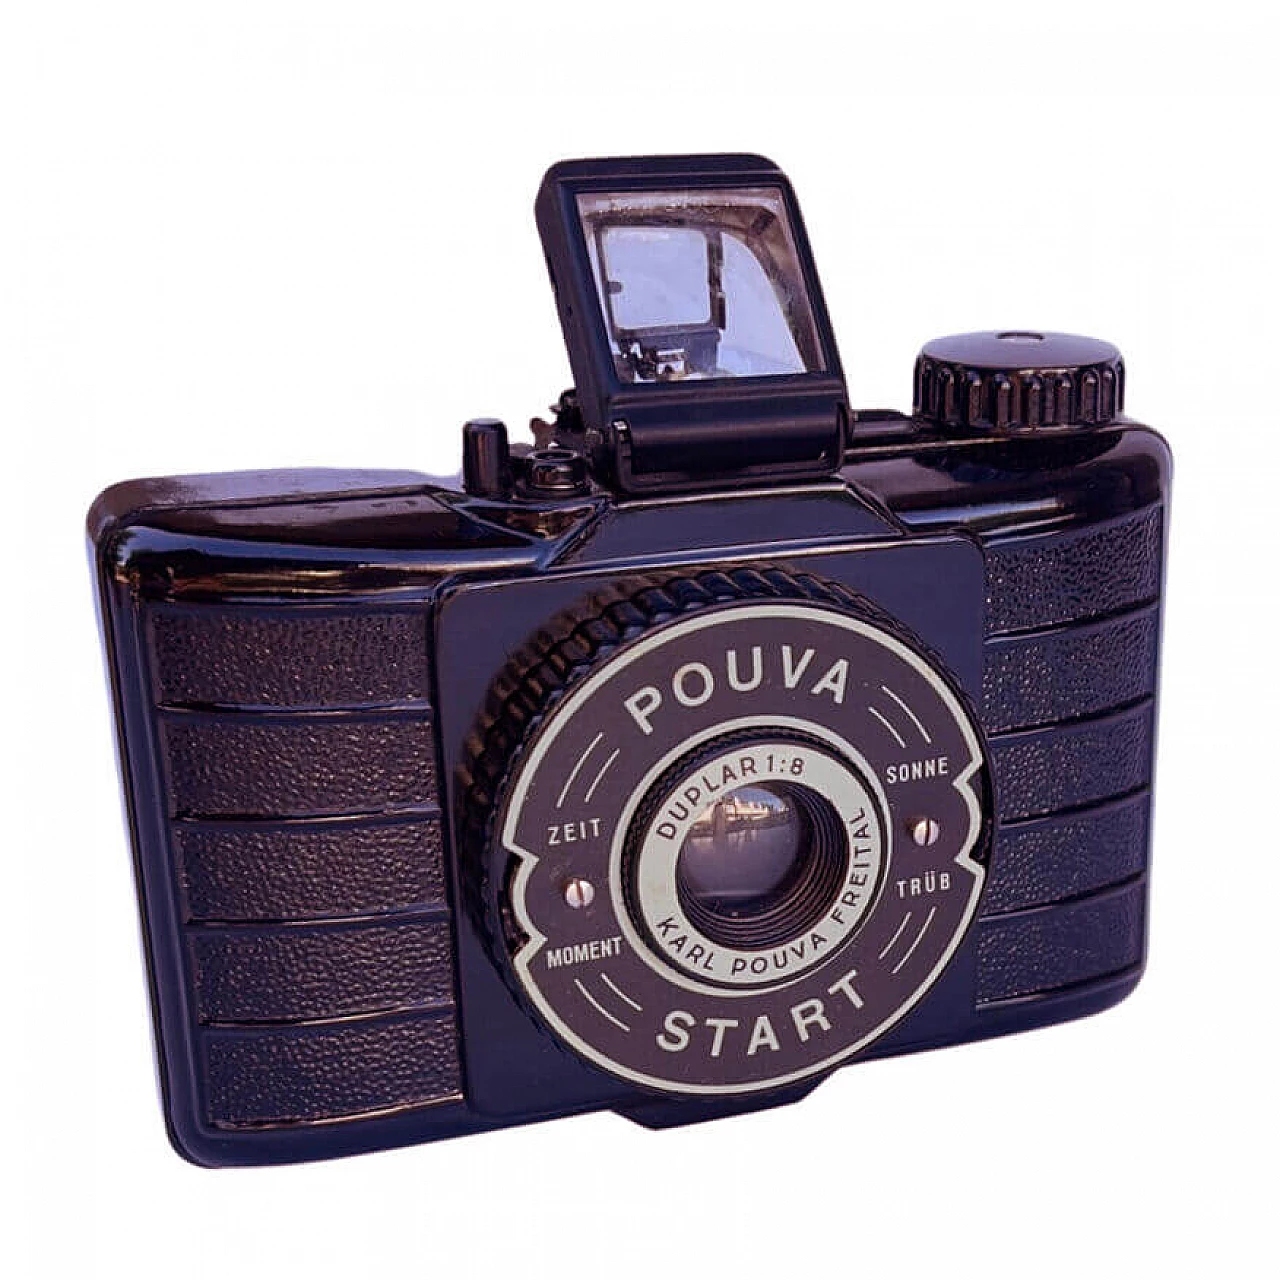 Fotocamera Pouva Start di Karl Pouva, anni '50 9